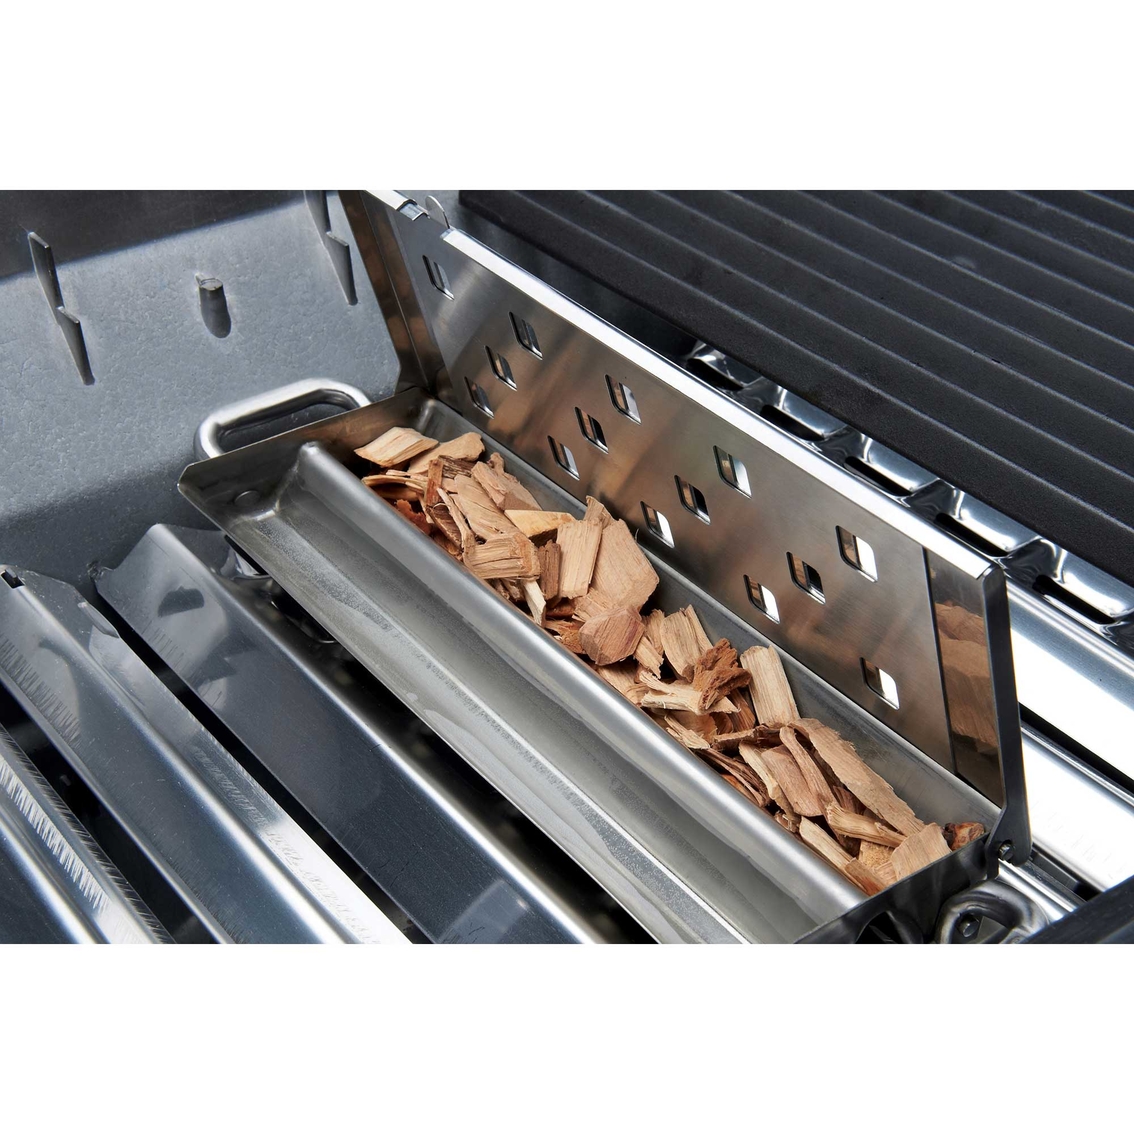 Broil King Premium Stainless Steel Smoker Box - Image 4 of 5